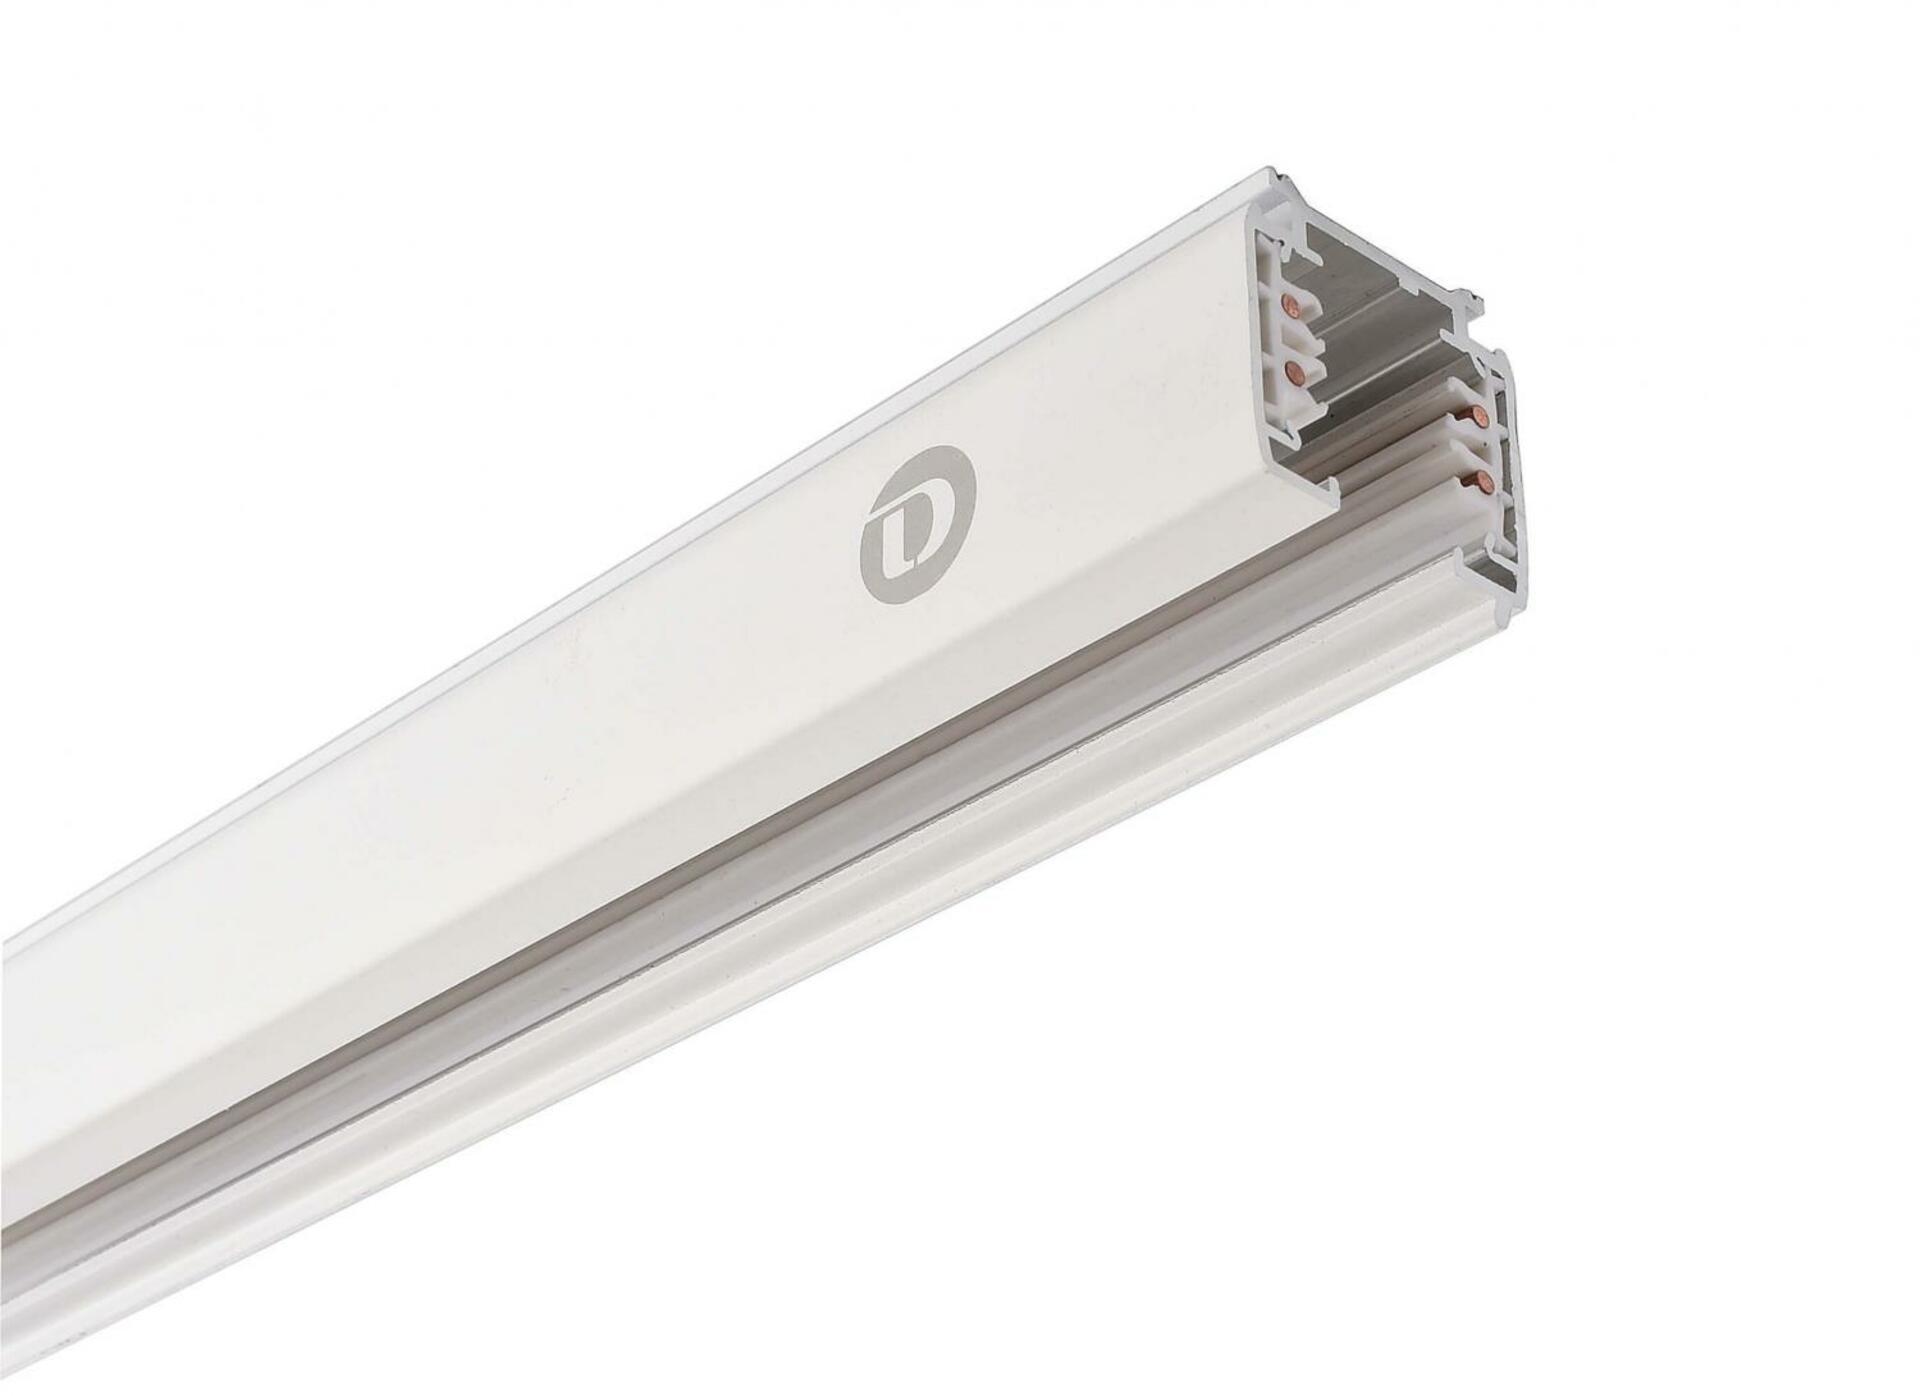 Light Impressions Deko-Light kolejnicový systém 3-fázový 230V D Line vestavná lišta 1m 220-240V AC/50-60Hz bílá RAL 9016 1000  710000